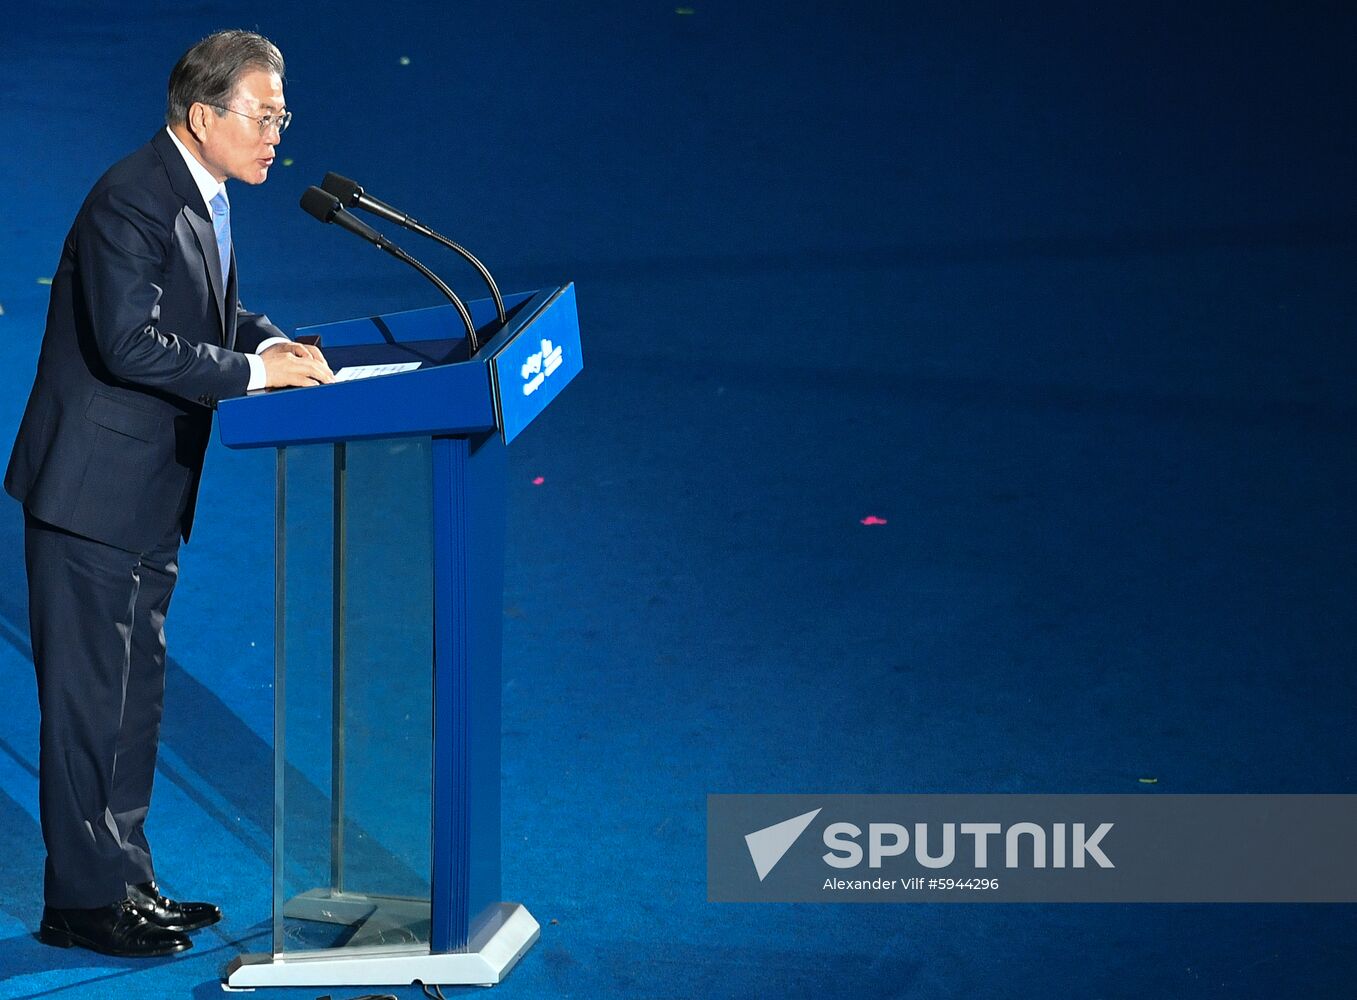 South Korea Aquatics Worlds Opening Ceremony